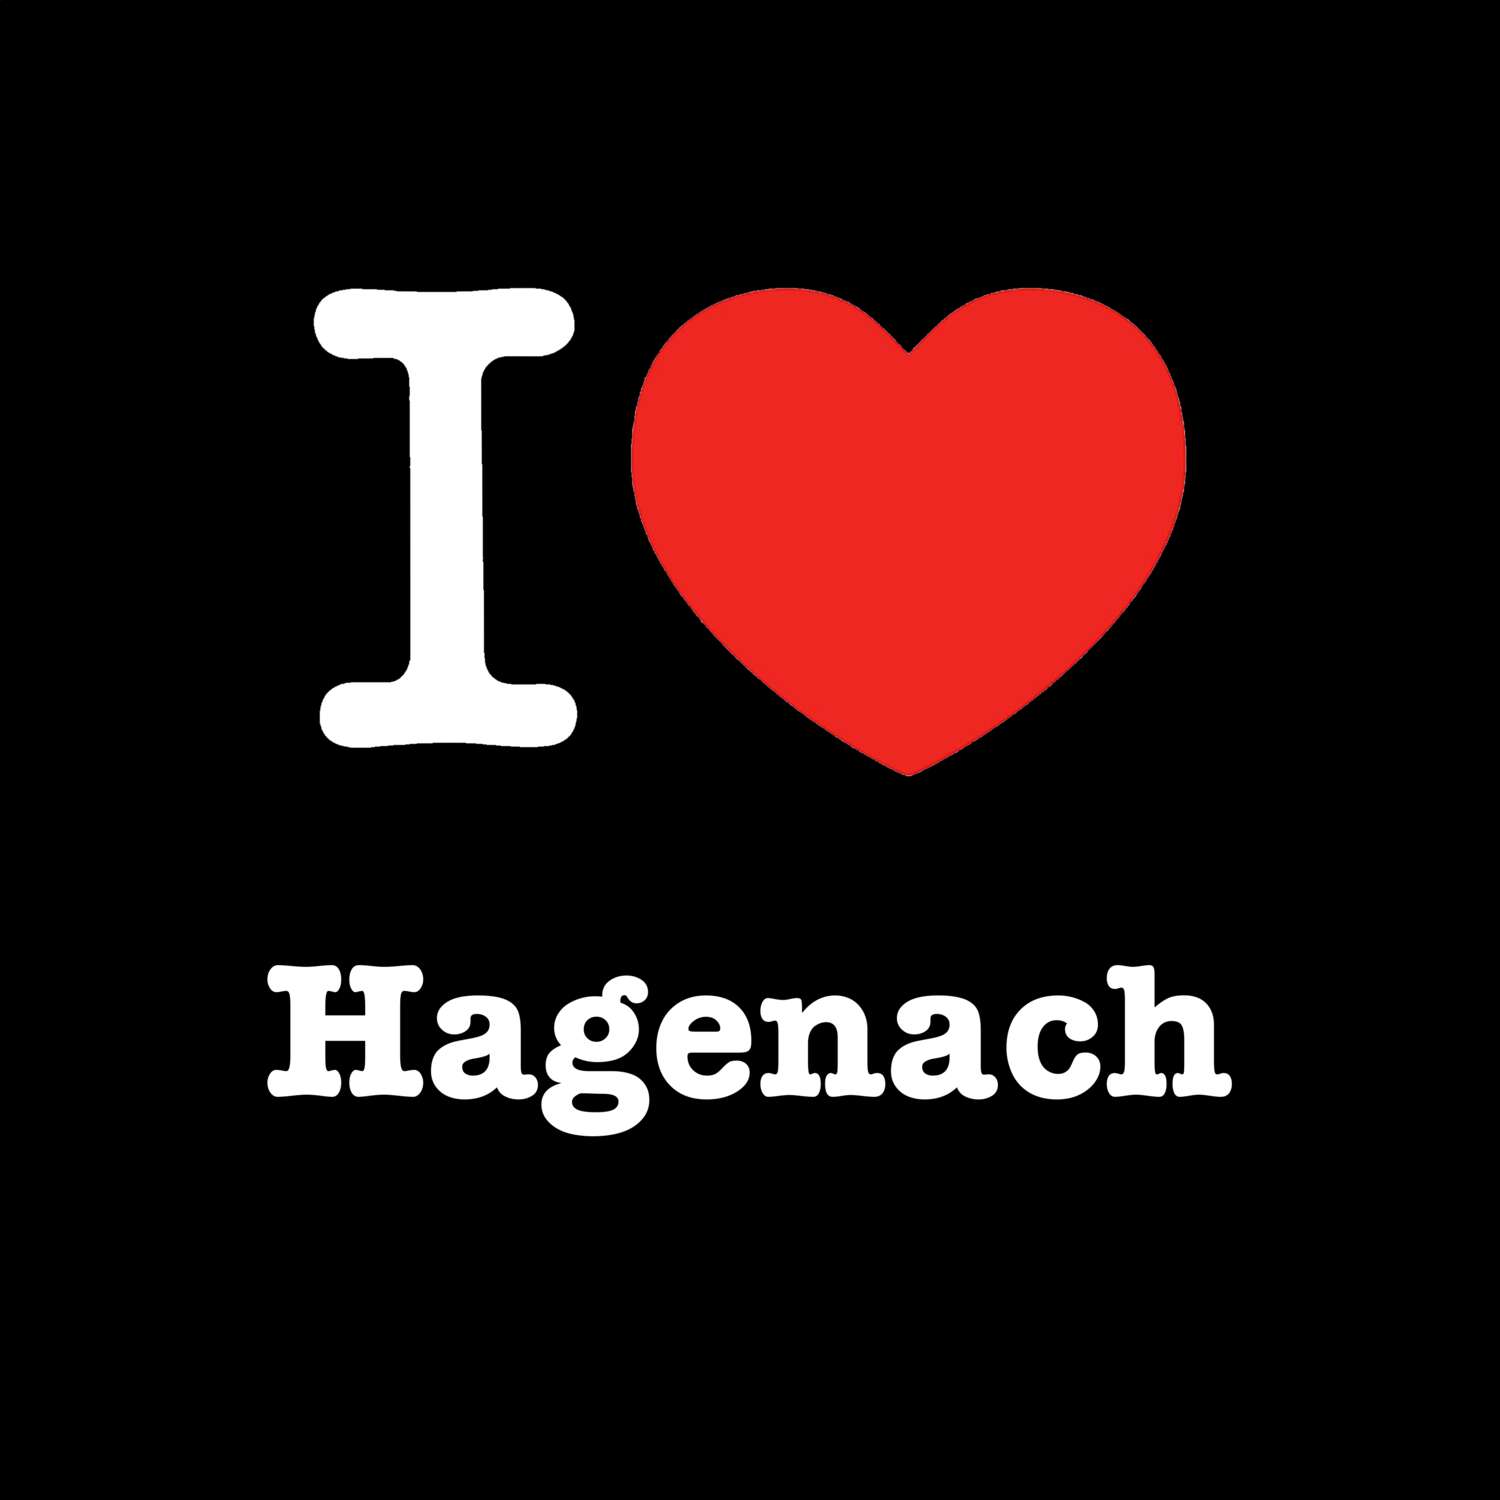 Hagenach T-Shirt »I love«